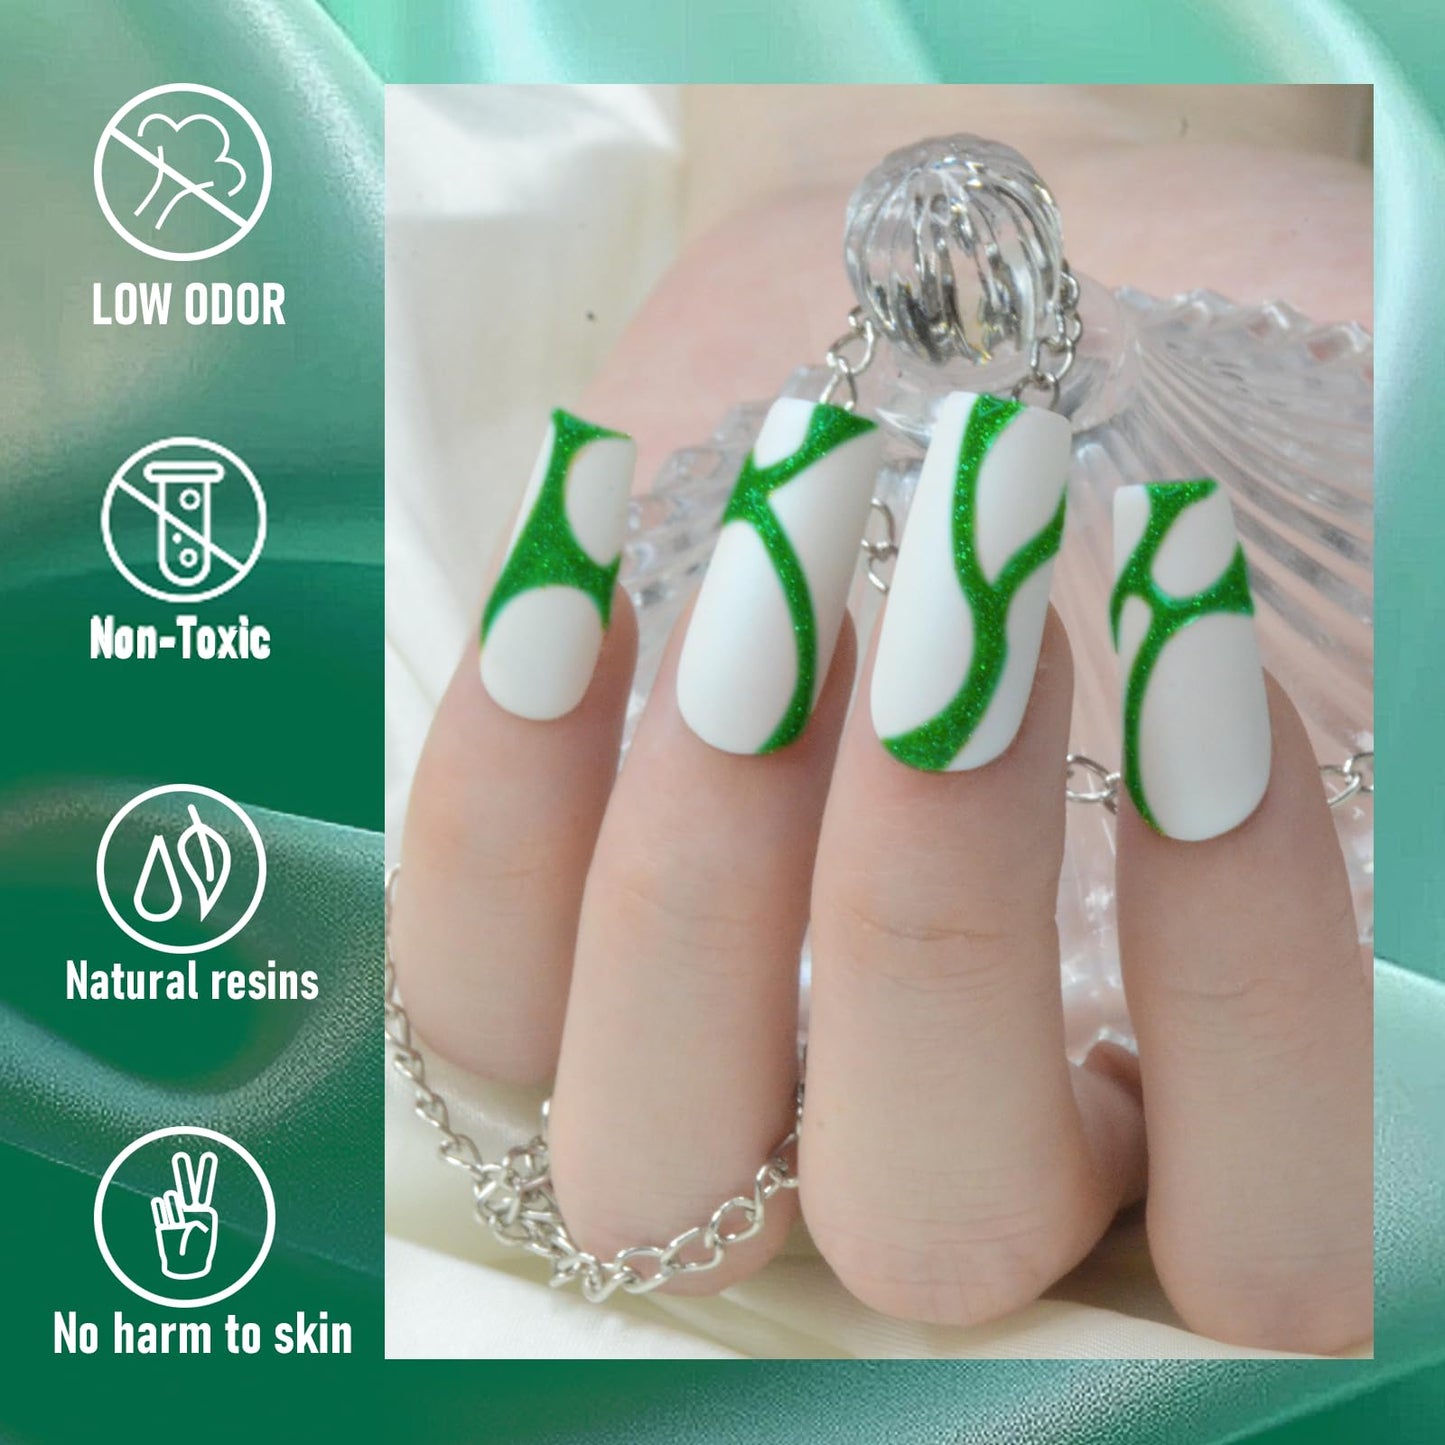 eodci Reflective Glitter Gel Polish, 15ML Olive Green Nail Polish Sparkly Shiny Gel Nail Art UV LED Lamp Need Nail Gel for Manicure DIY and Nail Salon